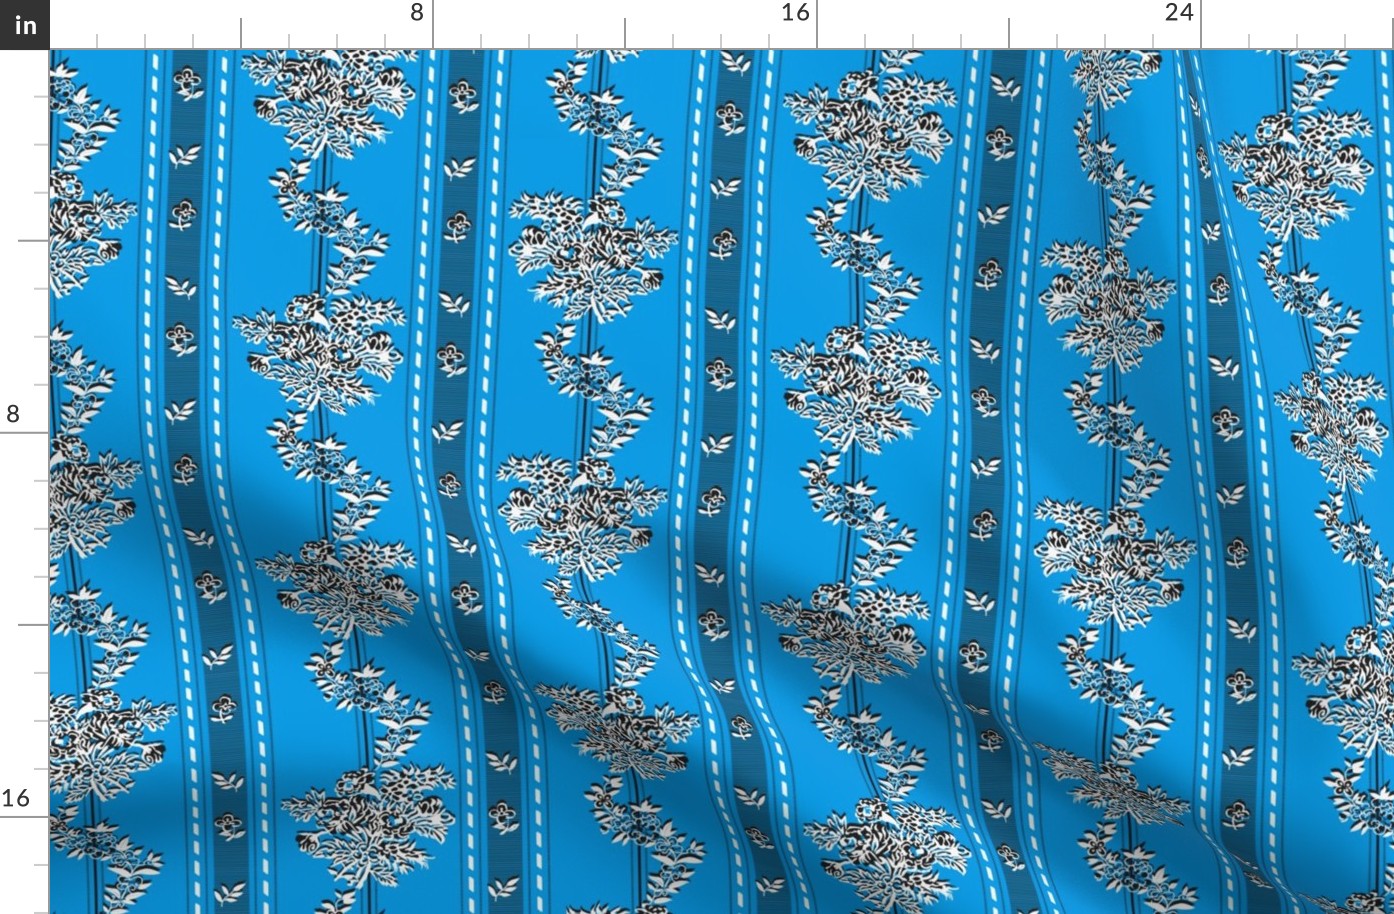 Phantom "Wishing gown" fabric - plain blue background